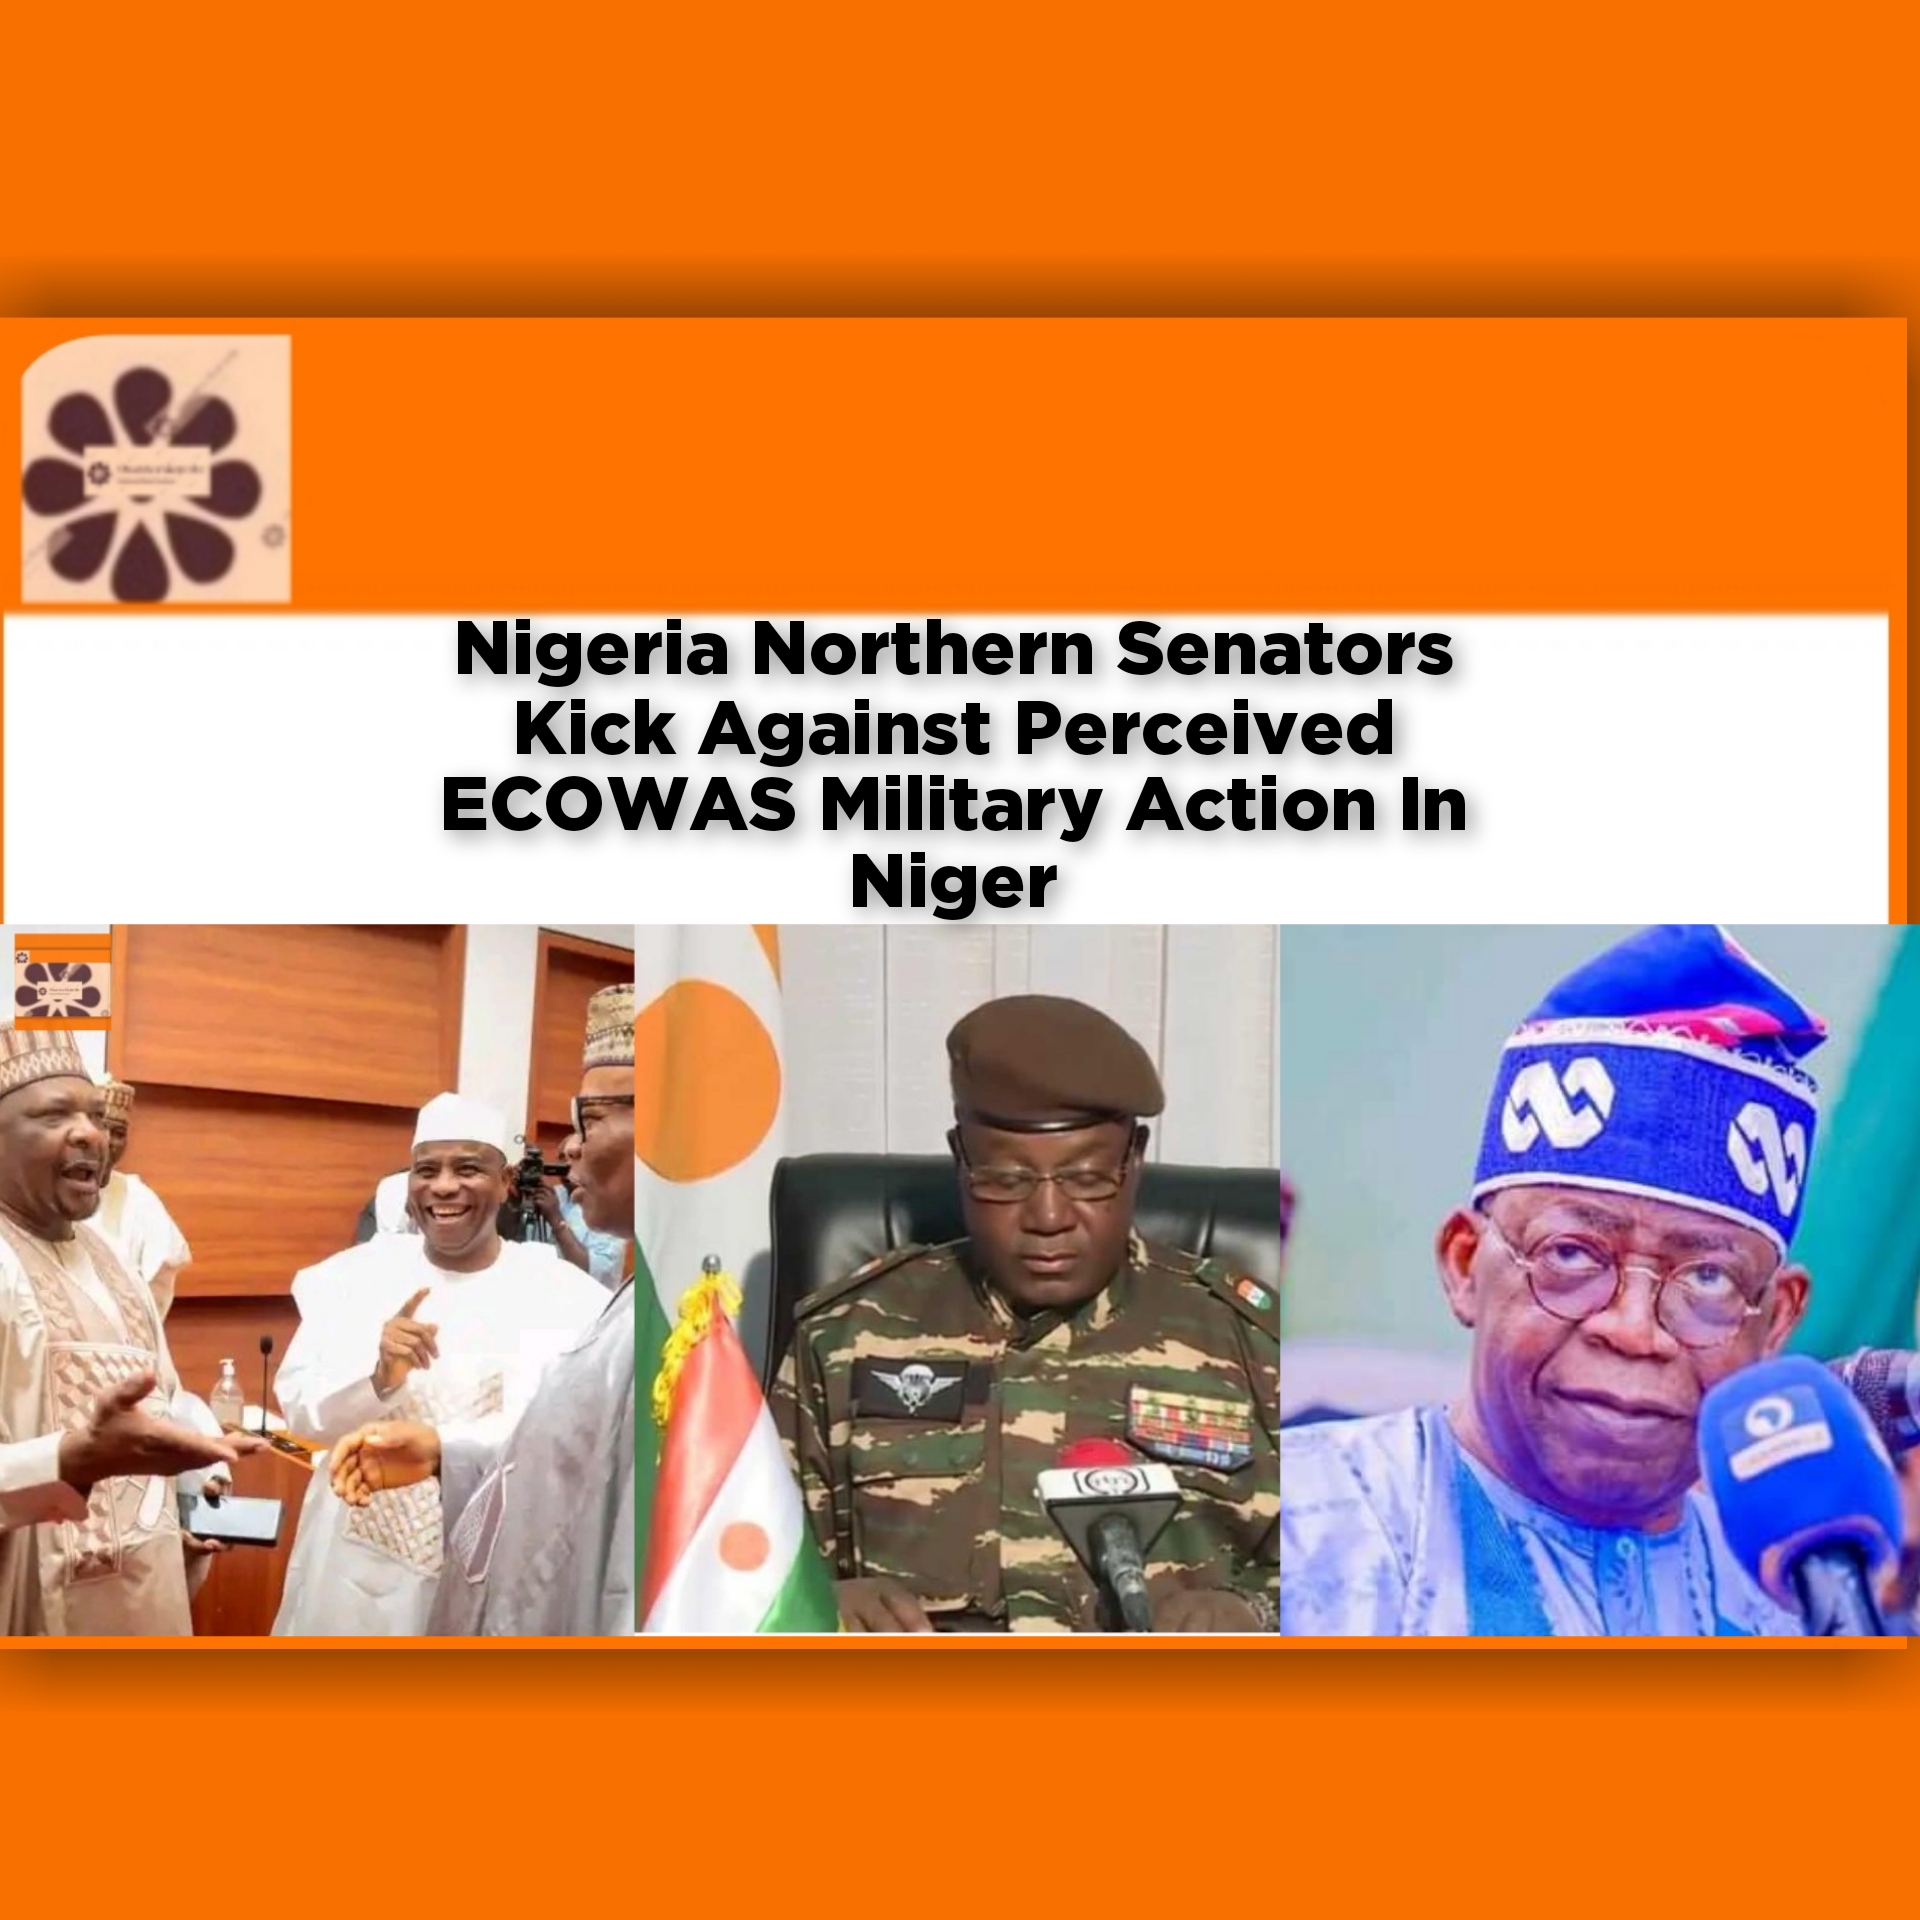 Nigeria Northern Senators Kick Against Perceived ECOWAS Military Action In Niger ~ OsazuwaAkonedo #Abdourahamane #Bazoum #Bola #Borno #Burkina #ECOWAS #Faso #Jigawa #Katsina #Kebbi #Libya #Mali #Mohammed #NASS #Niger #Senate #Sokoto #Yobe #Zamfara